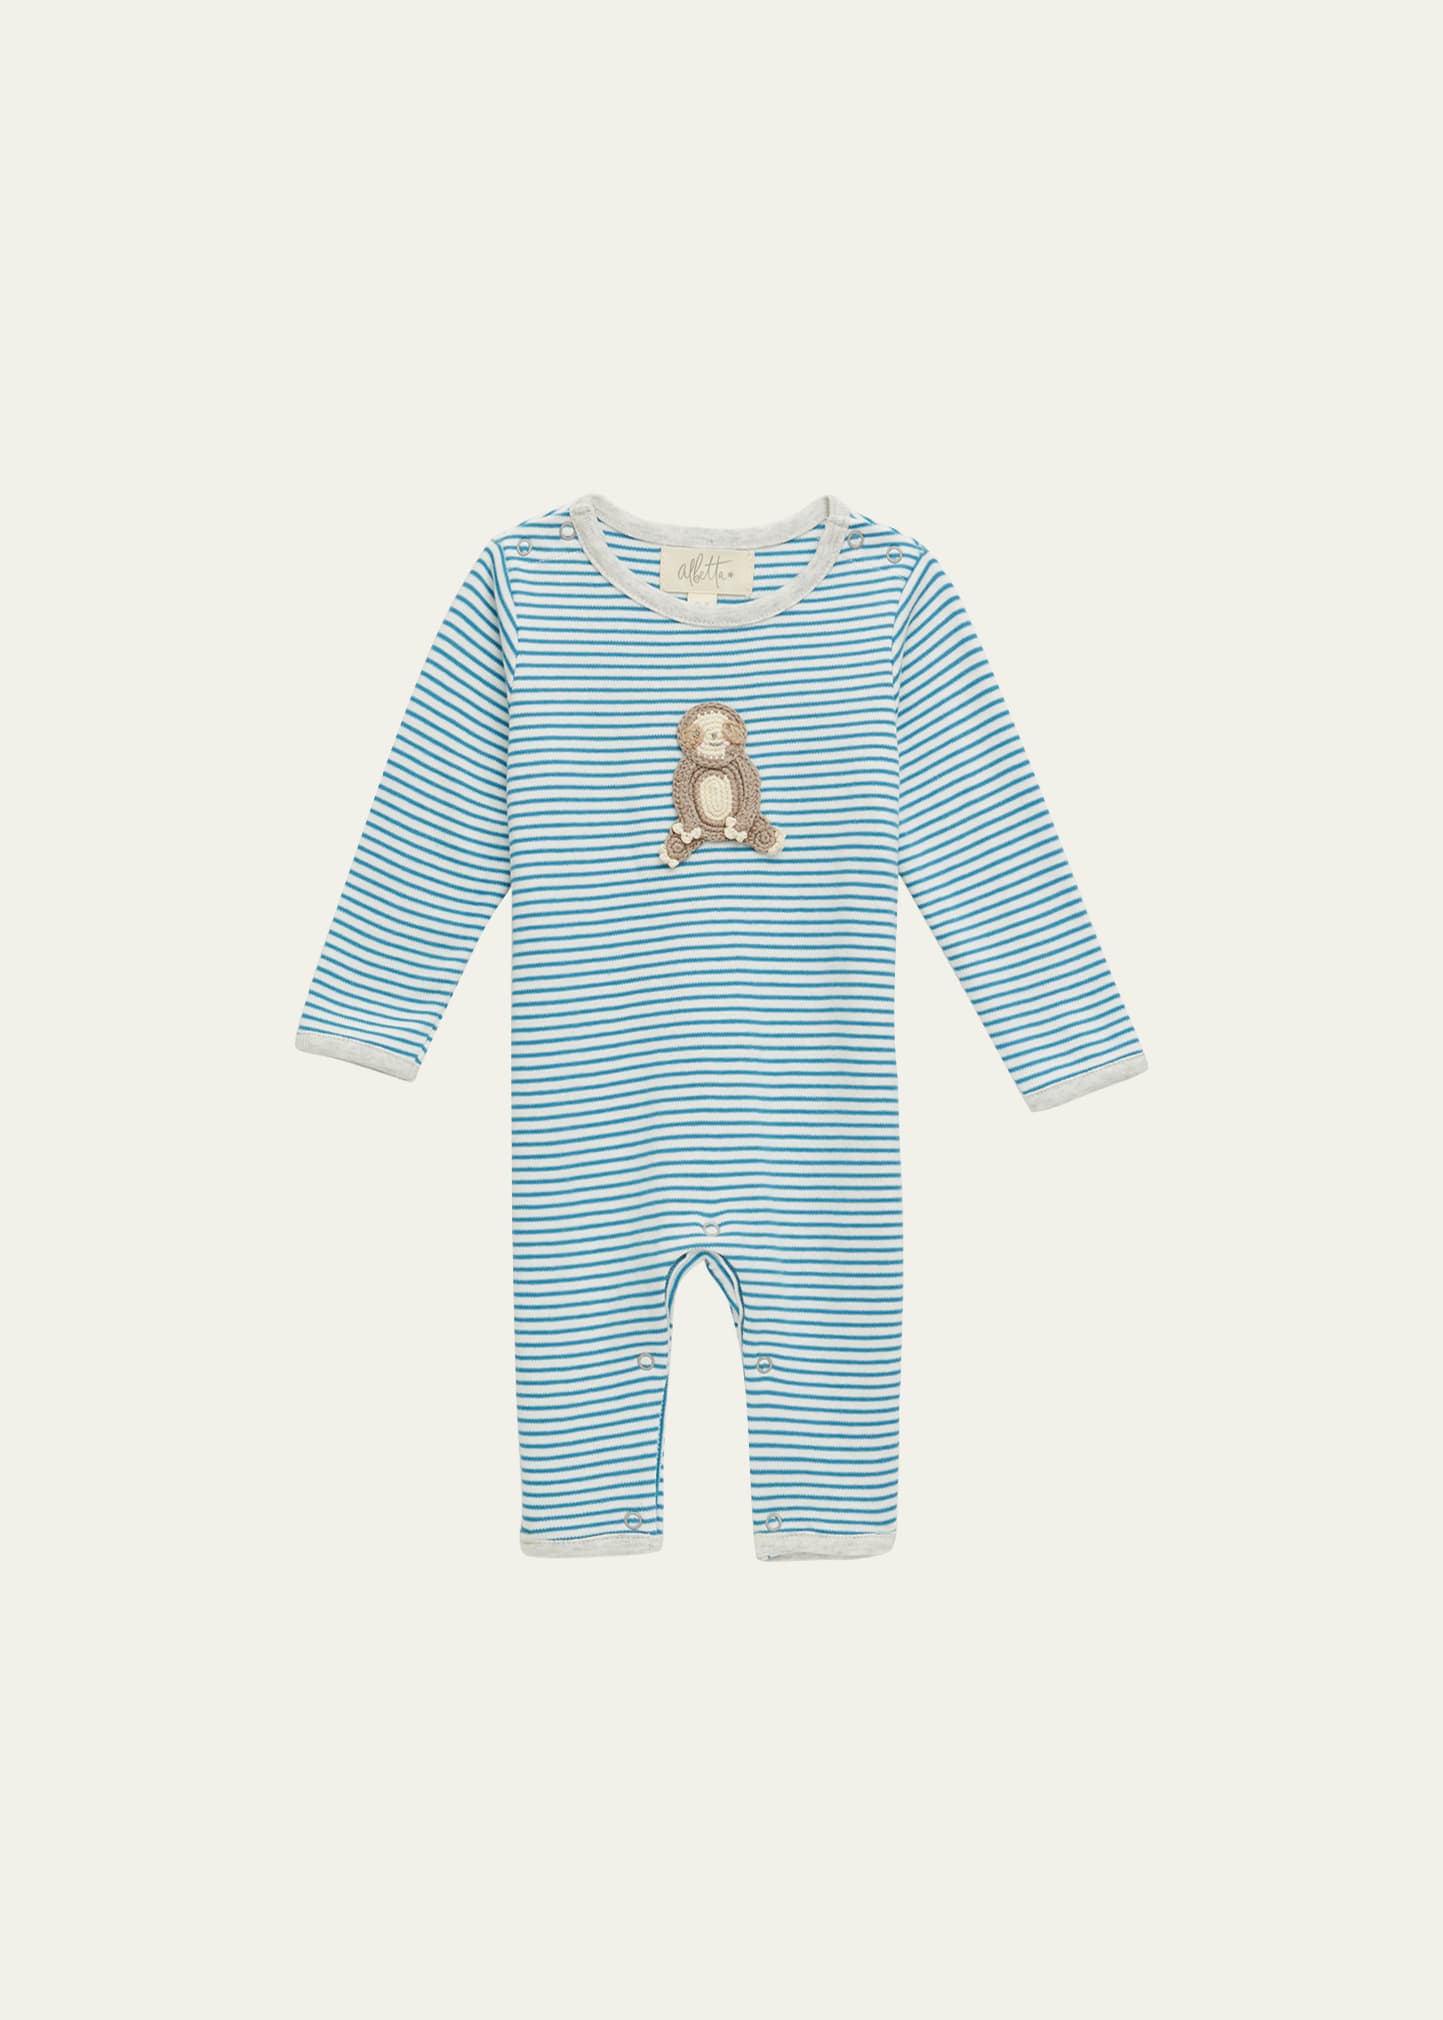 Albetta Babies' Kid's Samuel Sloth Crocheted Striped Playsuit In Bright Blue